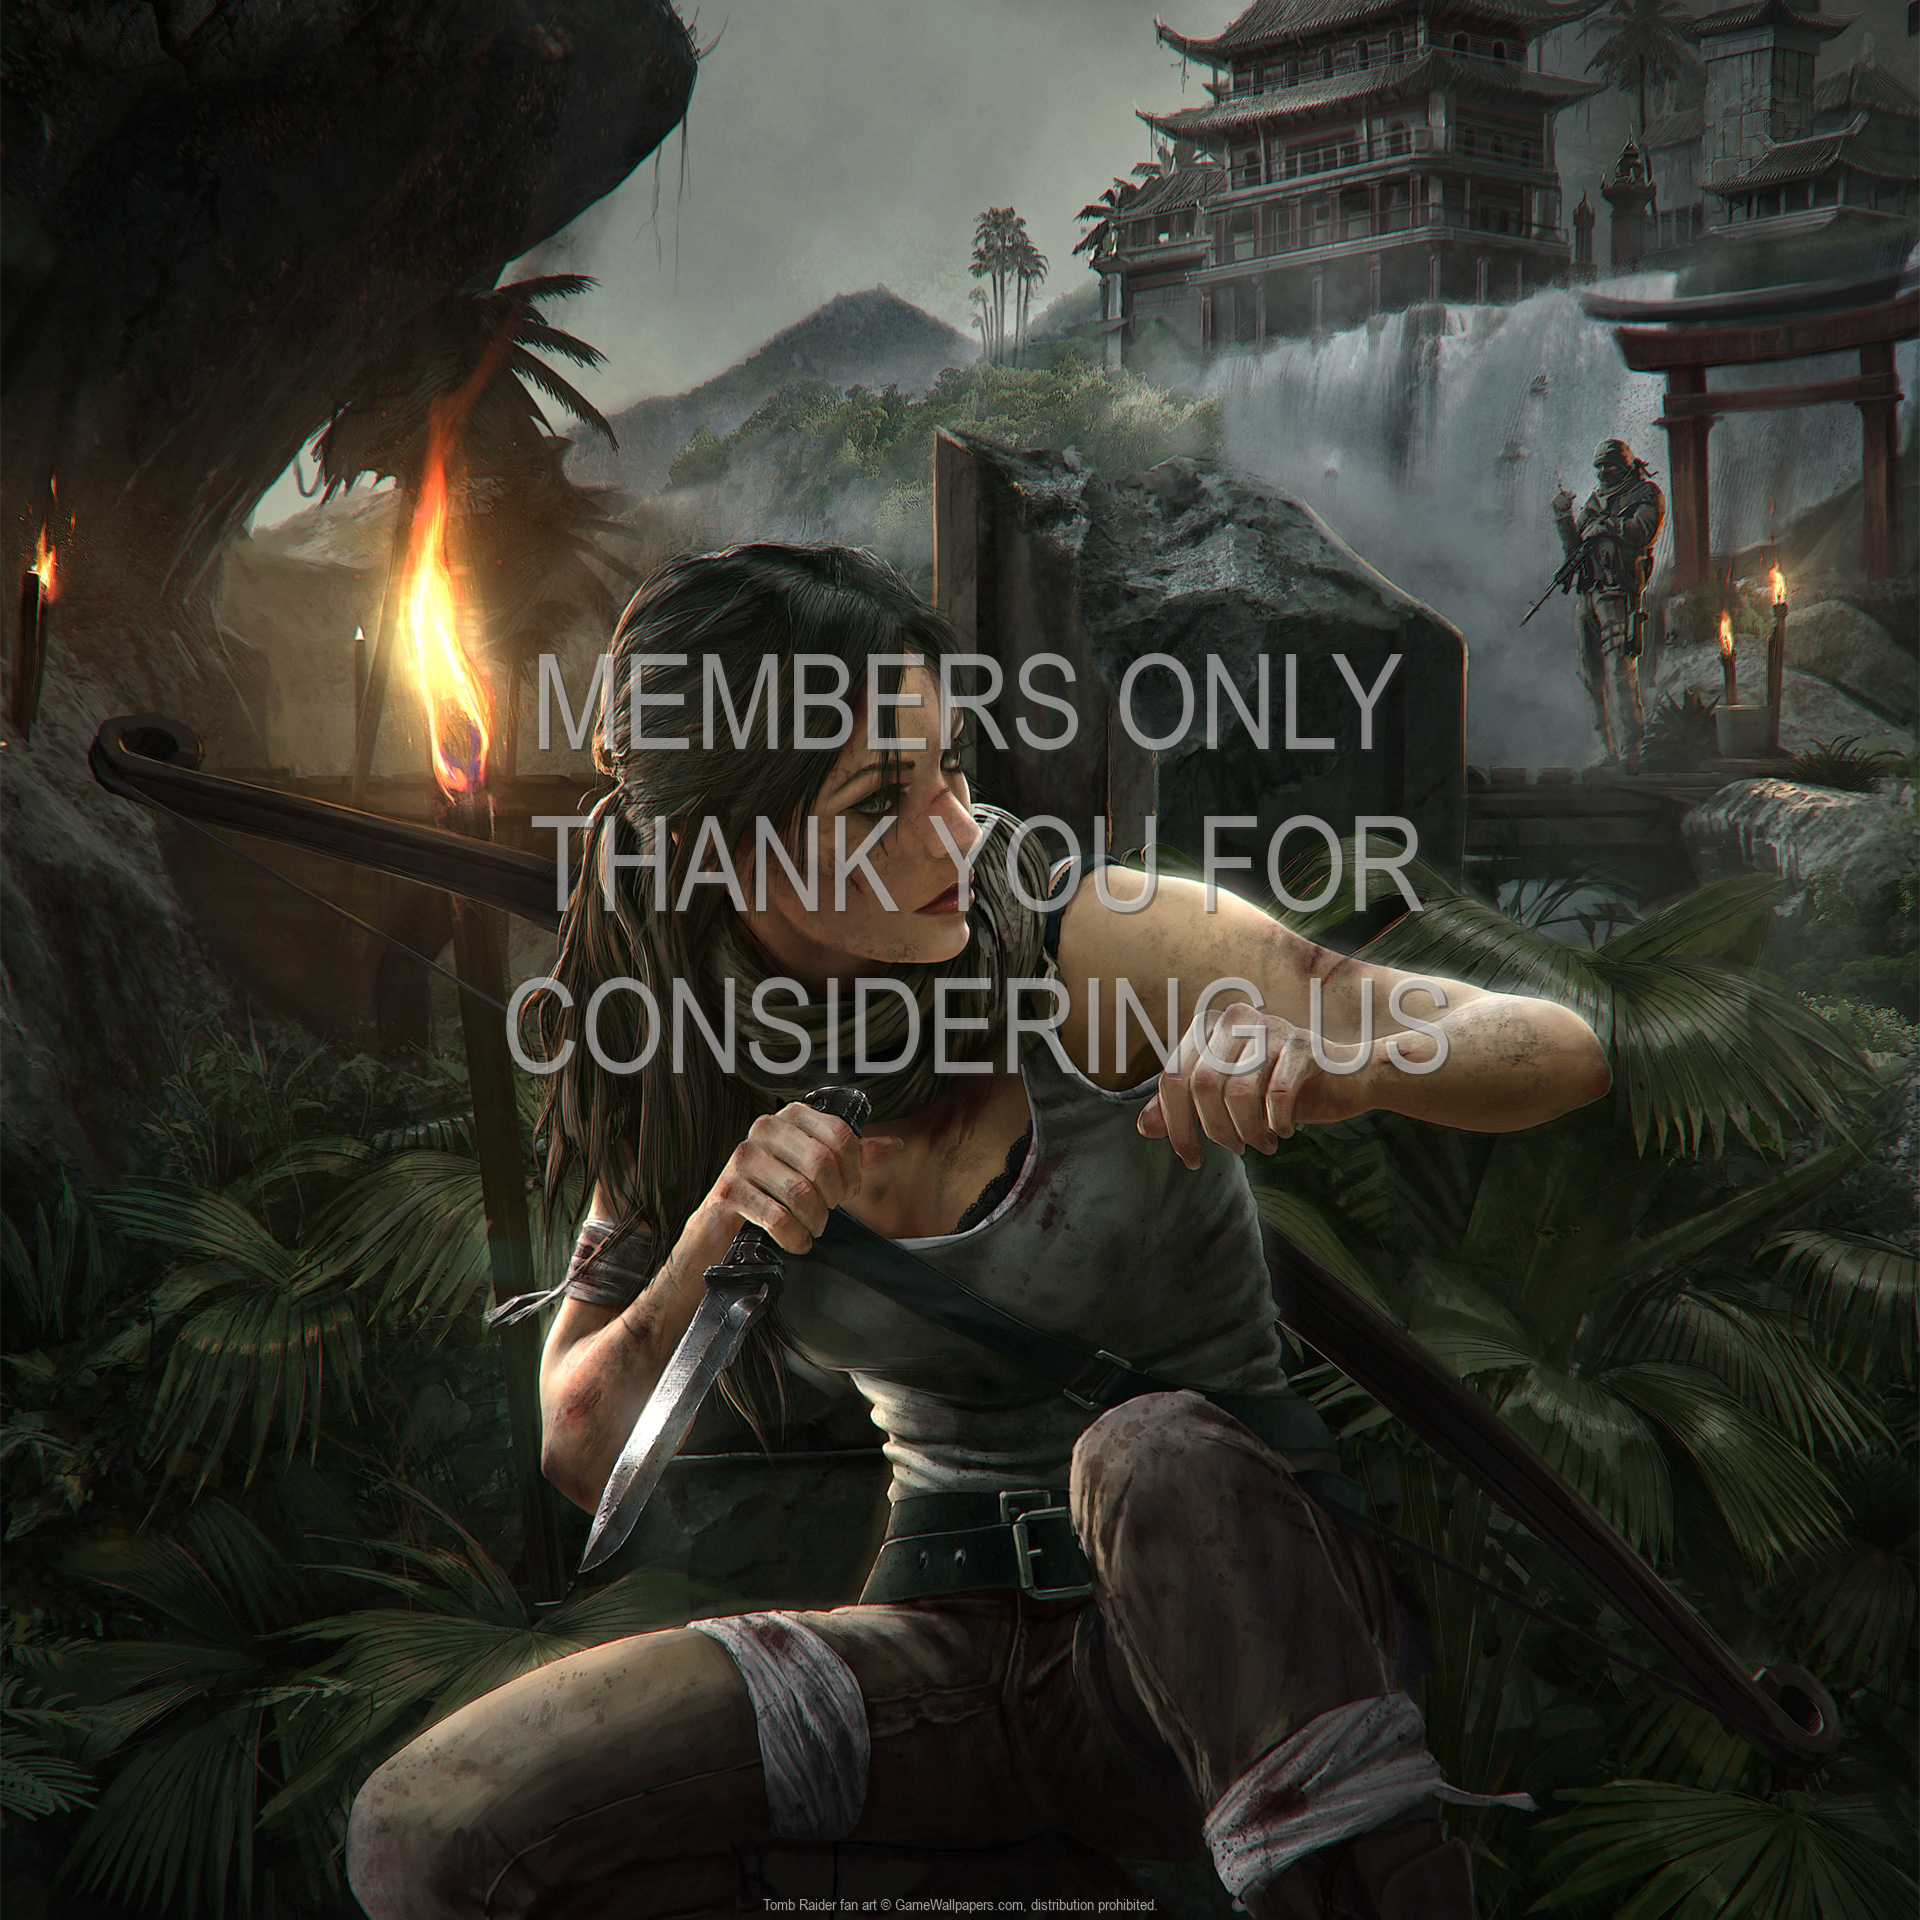 Tomb Raider fan art 1080p Horizontal Mobile wallpaper or background 09